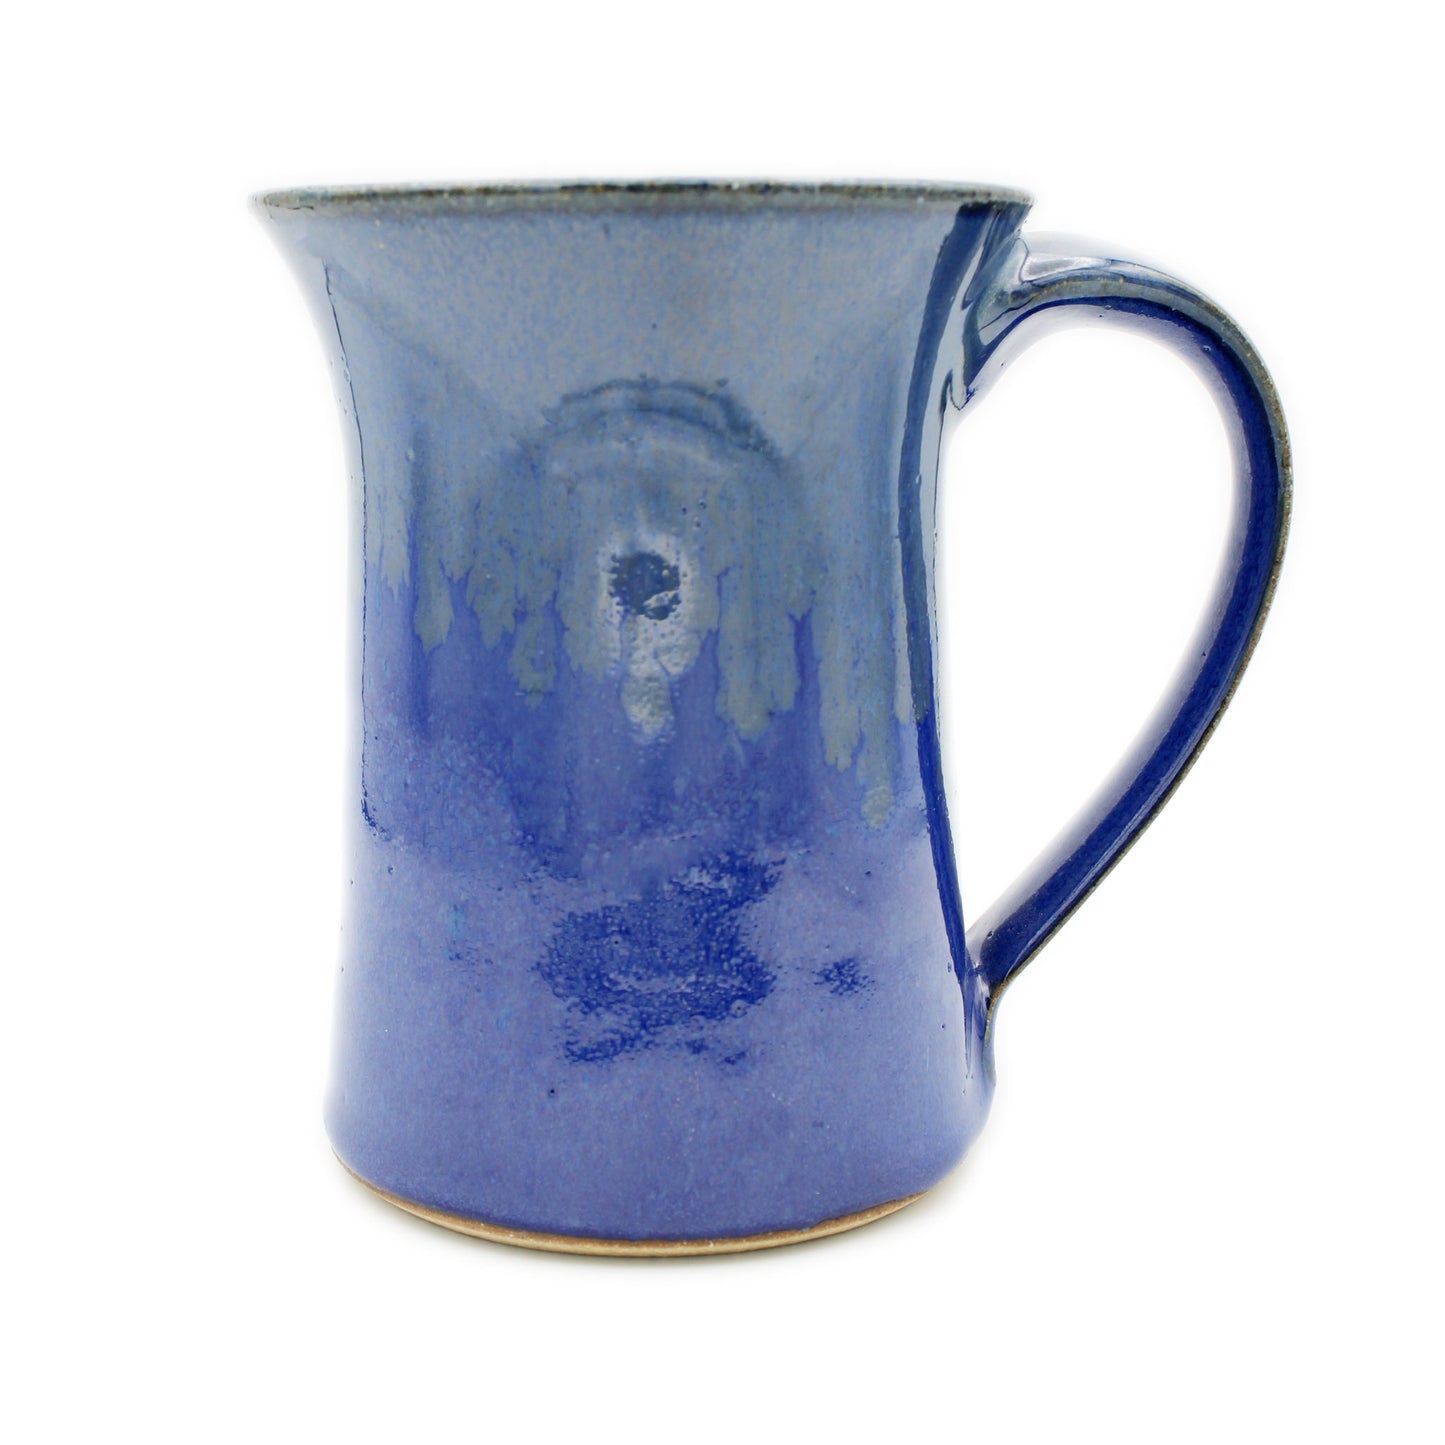 Taza hecha a mano con esmalte azul